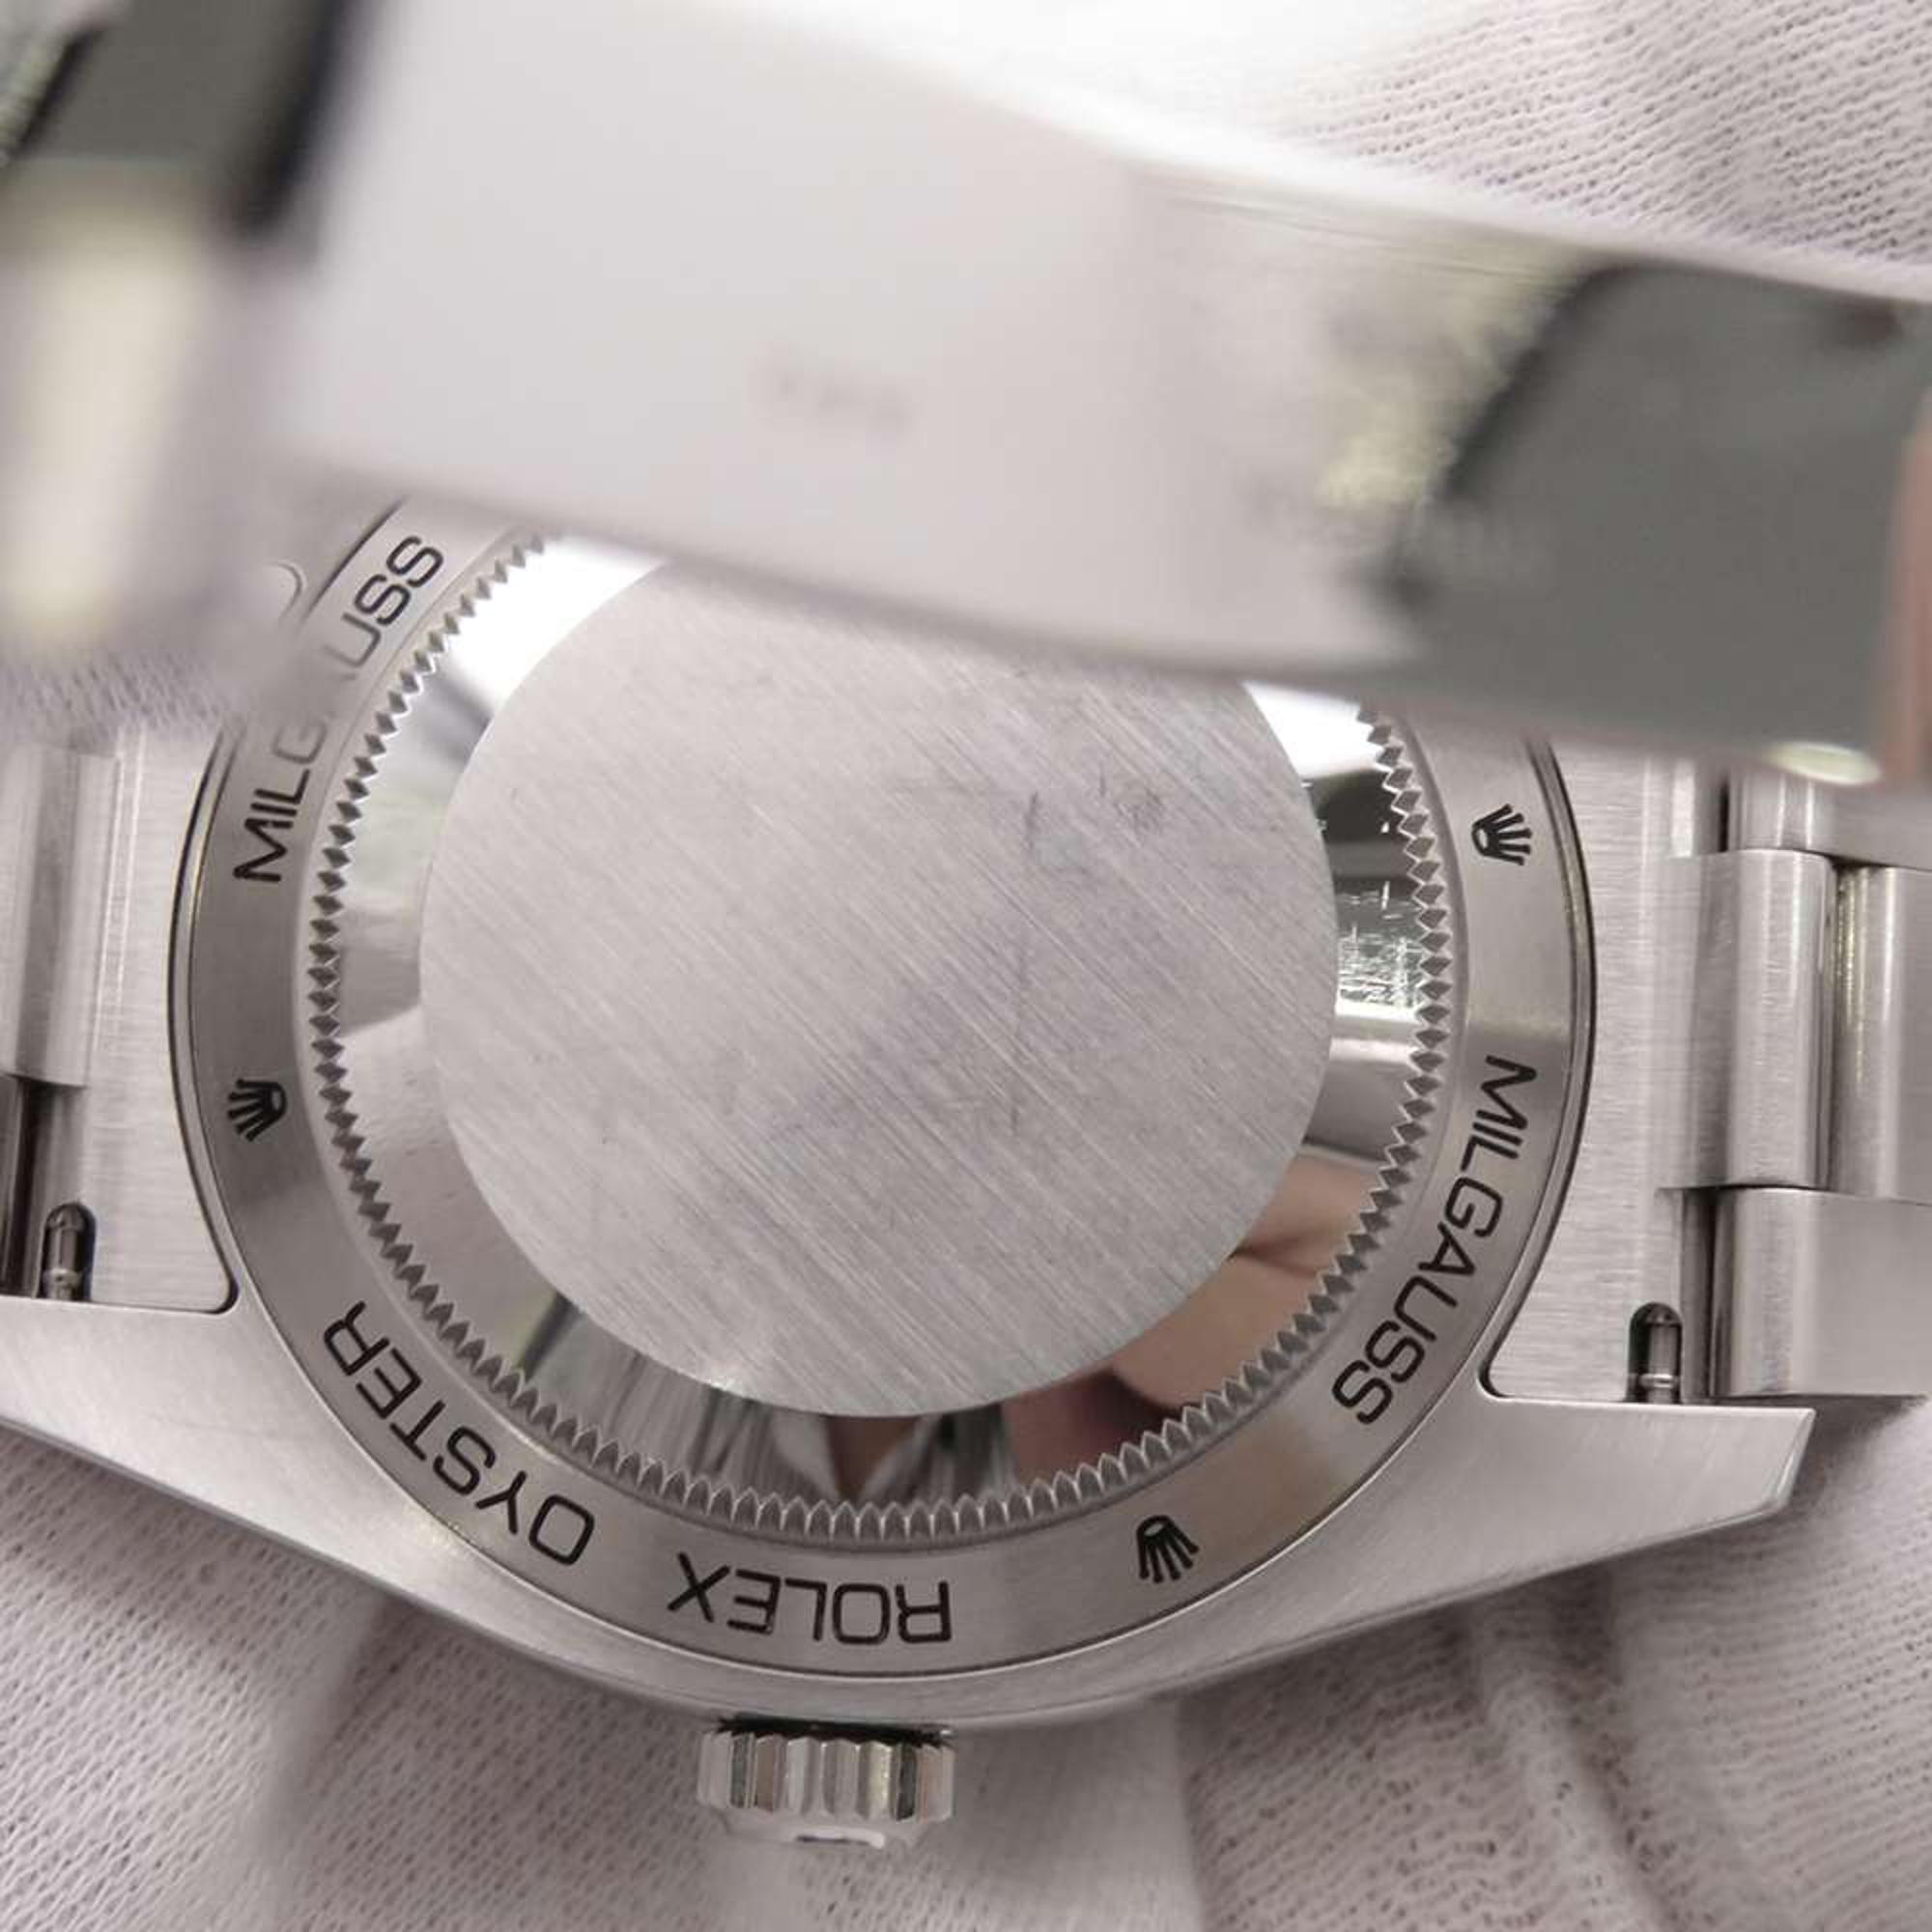 Rolex Green Stainless Steel Milgauss 116400GV Men's Wristwatch 40 Mm